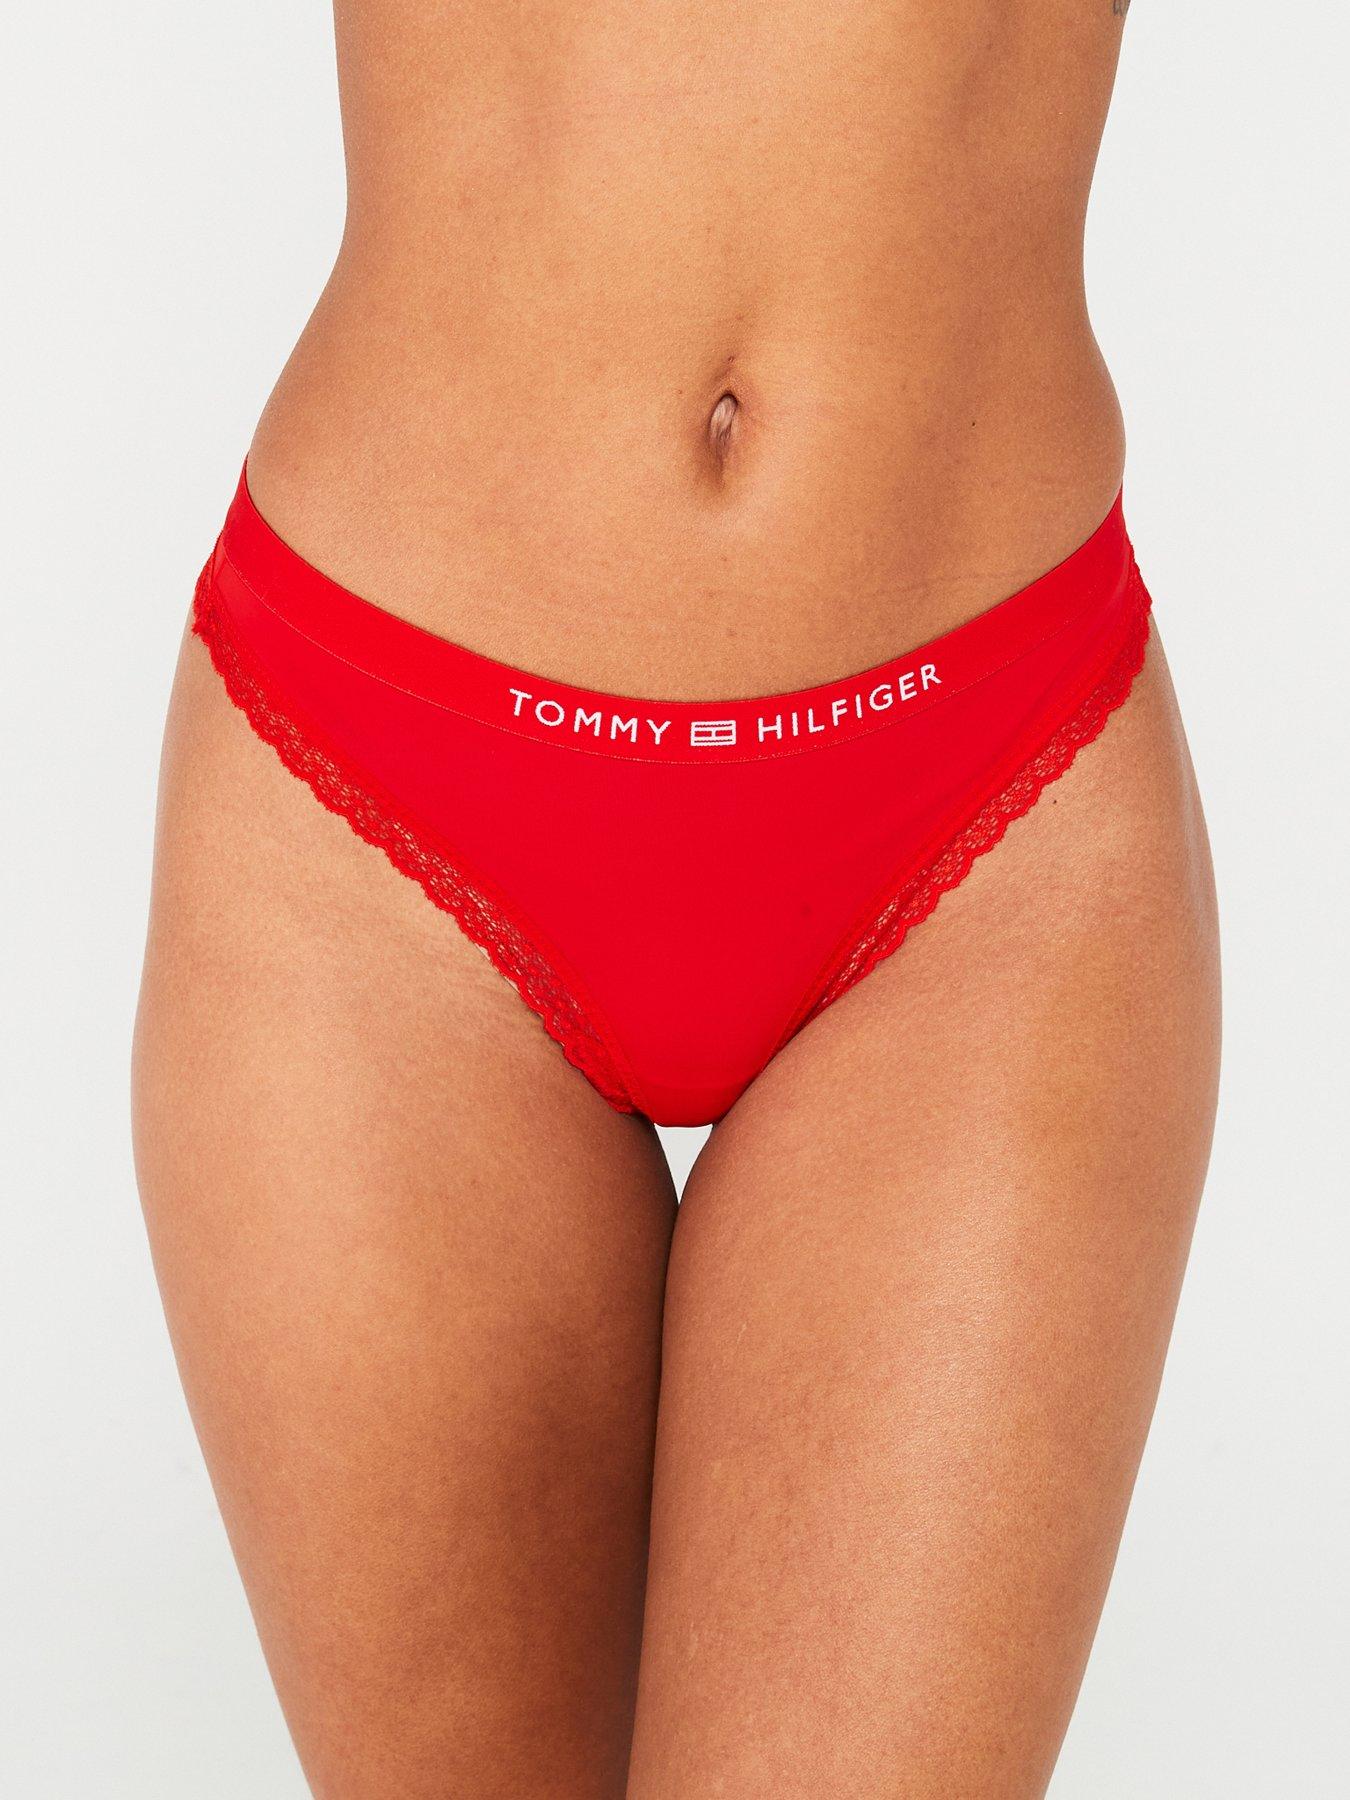 Tommy Hilfiger womens Bikini-cut and Boy Shorts Cotton Panty, Multi-pack  Underwear, Tonal Th Hilfiger, Small US at  Women's Clothing store